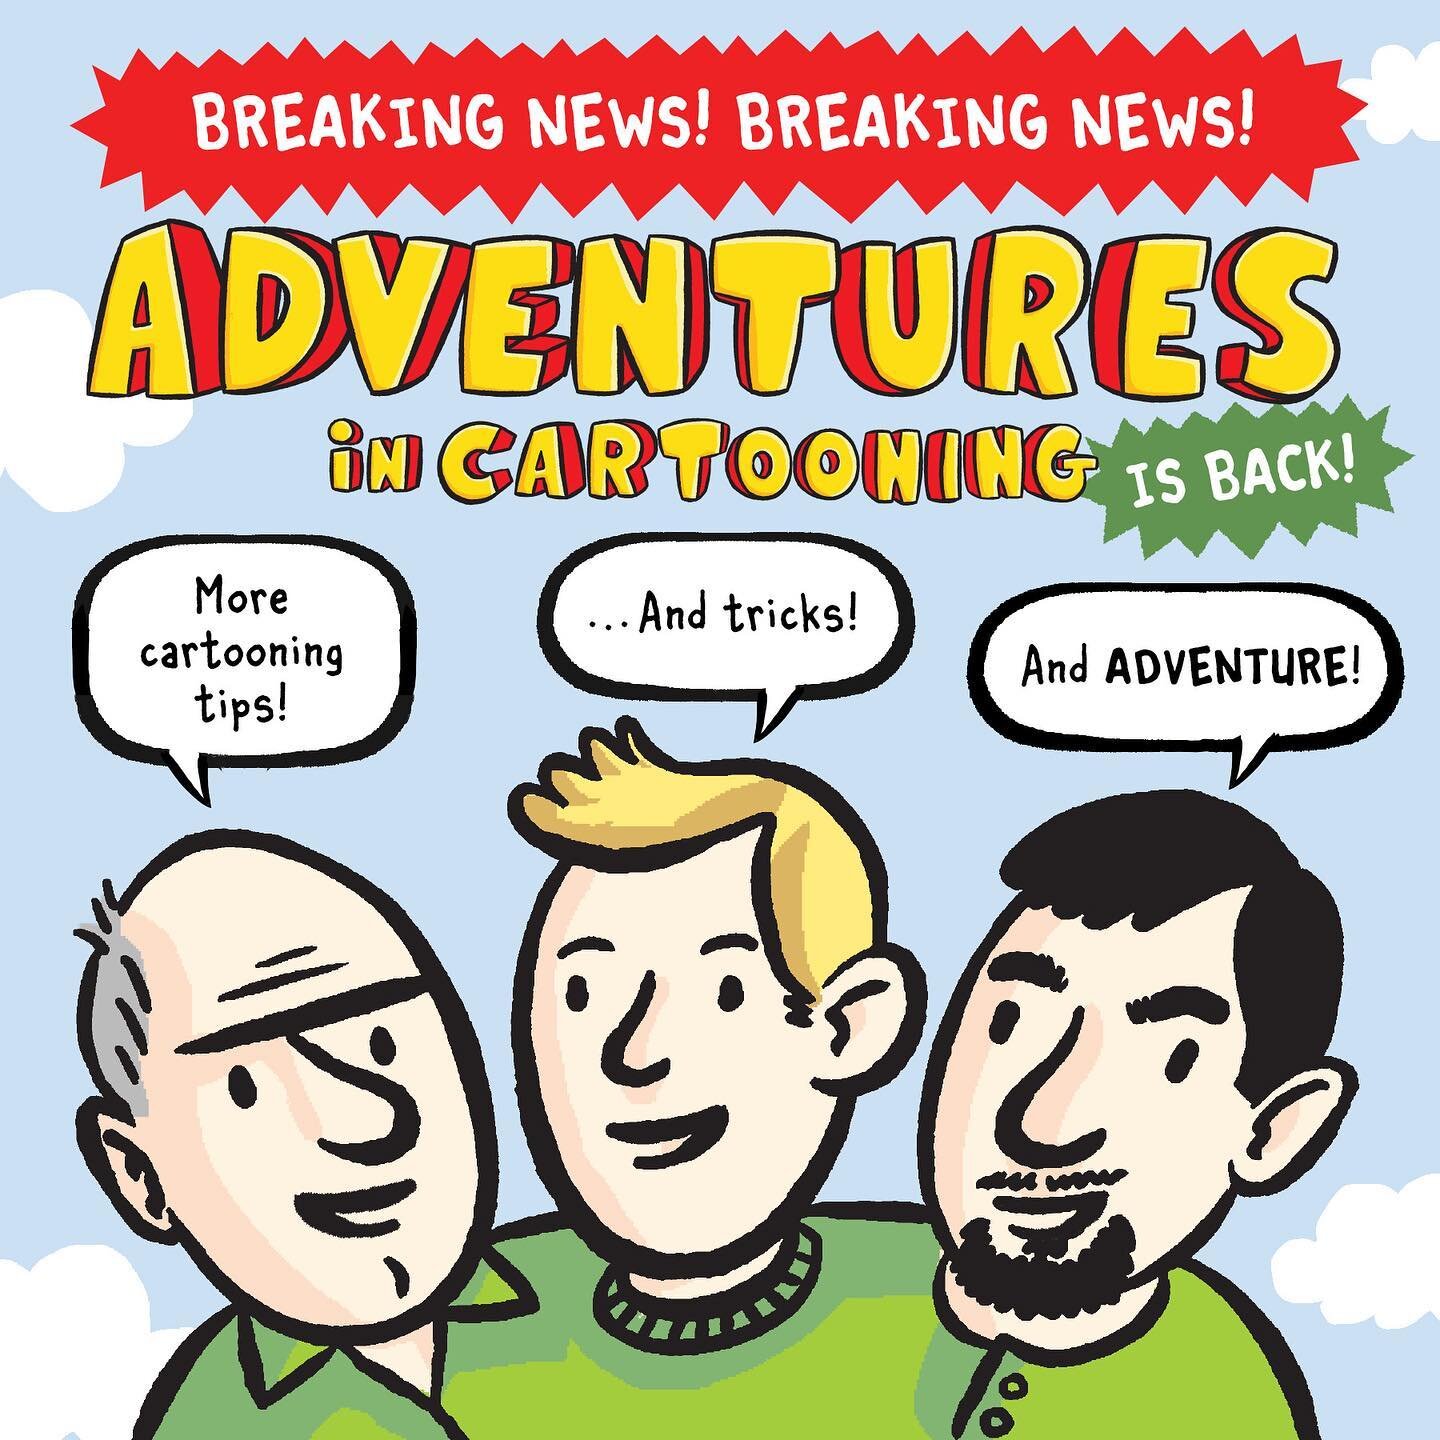 Exciting ADVENTURES IN CARTOONING news:

https://us.macmillan.com/series/adventuresincartooning